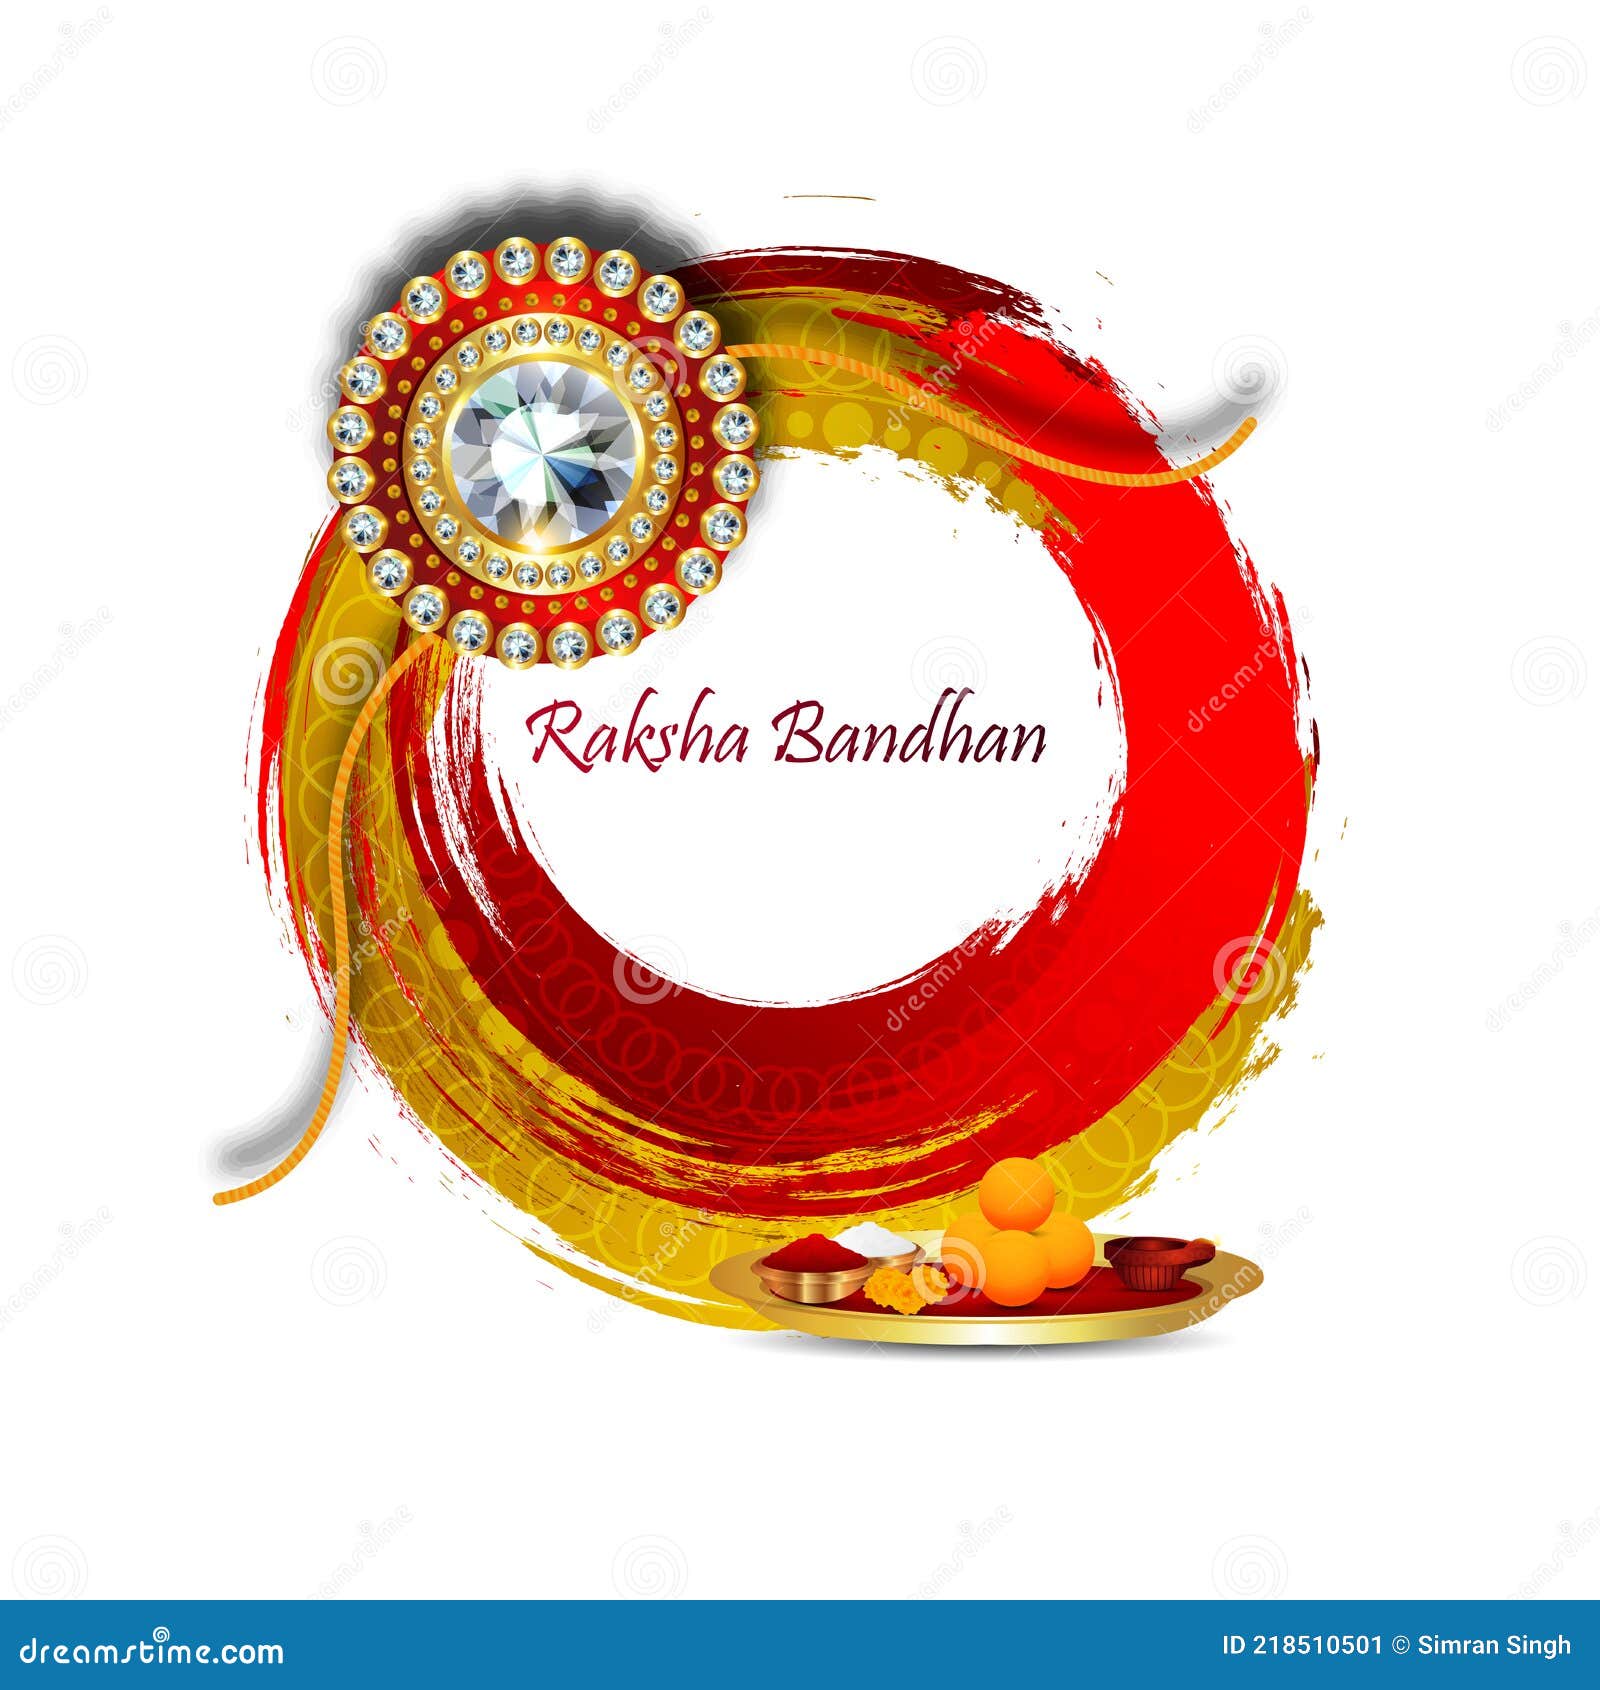 Indian Festival of Happy Raksha Bandhan Celebration Greeting Card on White  Background Stock Illustration - Illustration of brother, hinduism: 218510501